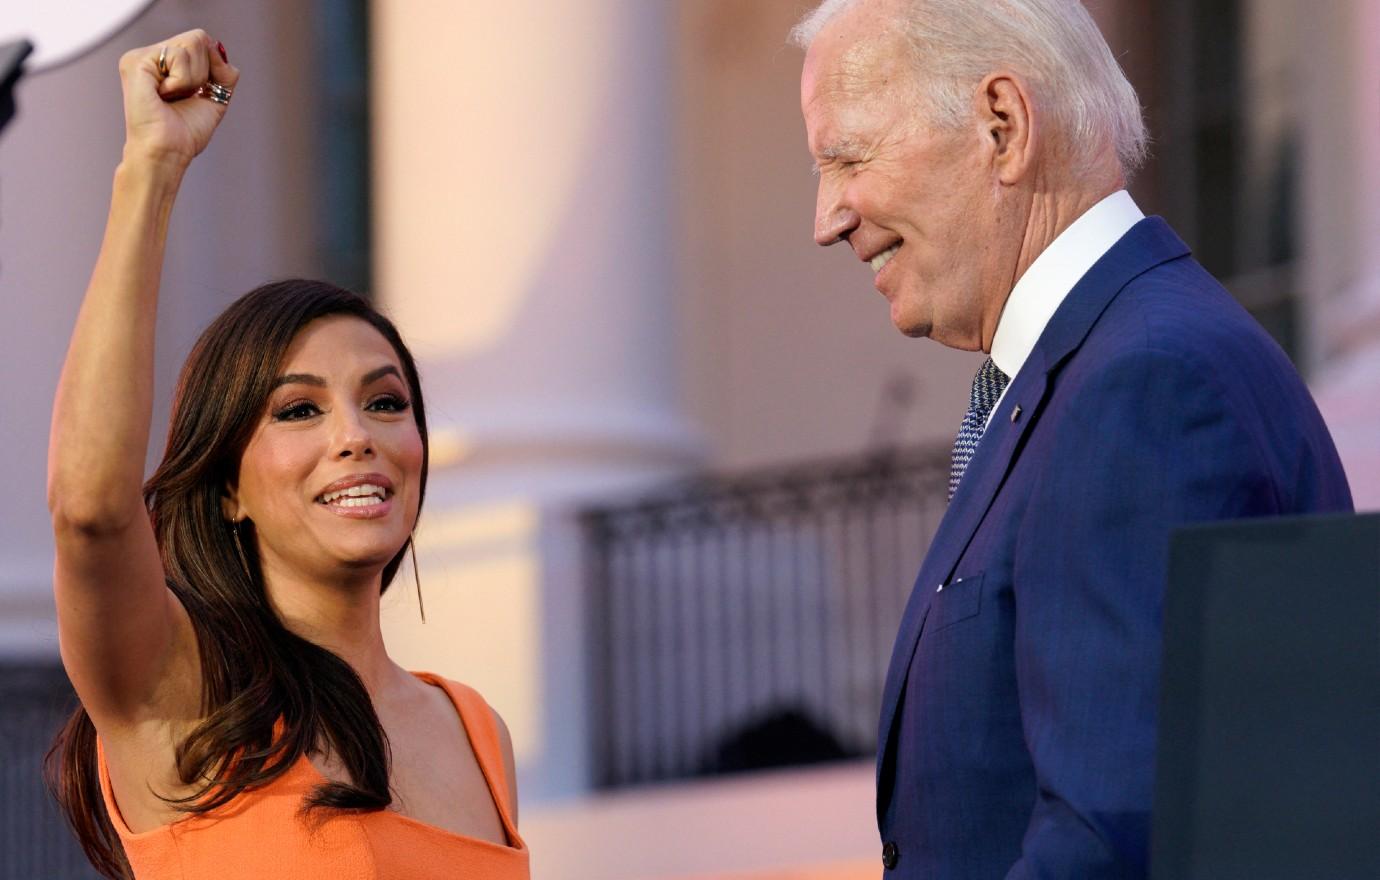 President Joe Biden Accused Of Trying To Grope Eva Longoria pic